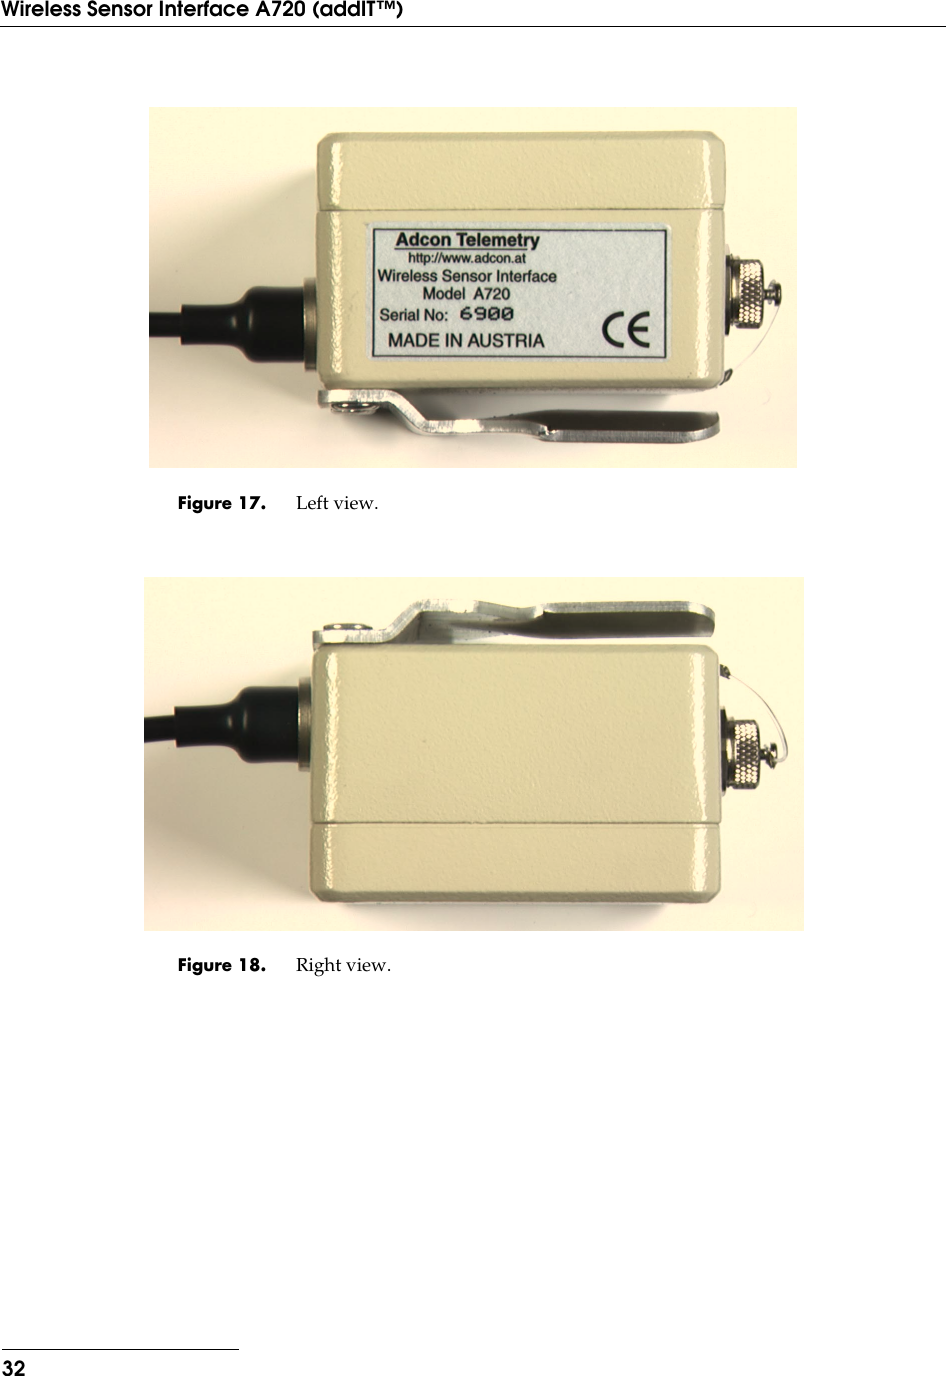 32Wireless Sensor Interface A720 (addIT™)Figure 17. Left view.Figure 18. Right view.